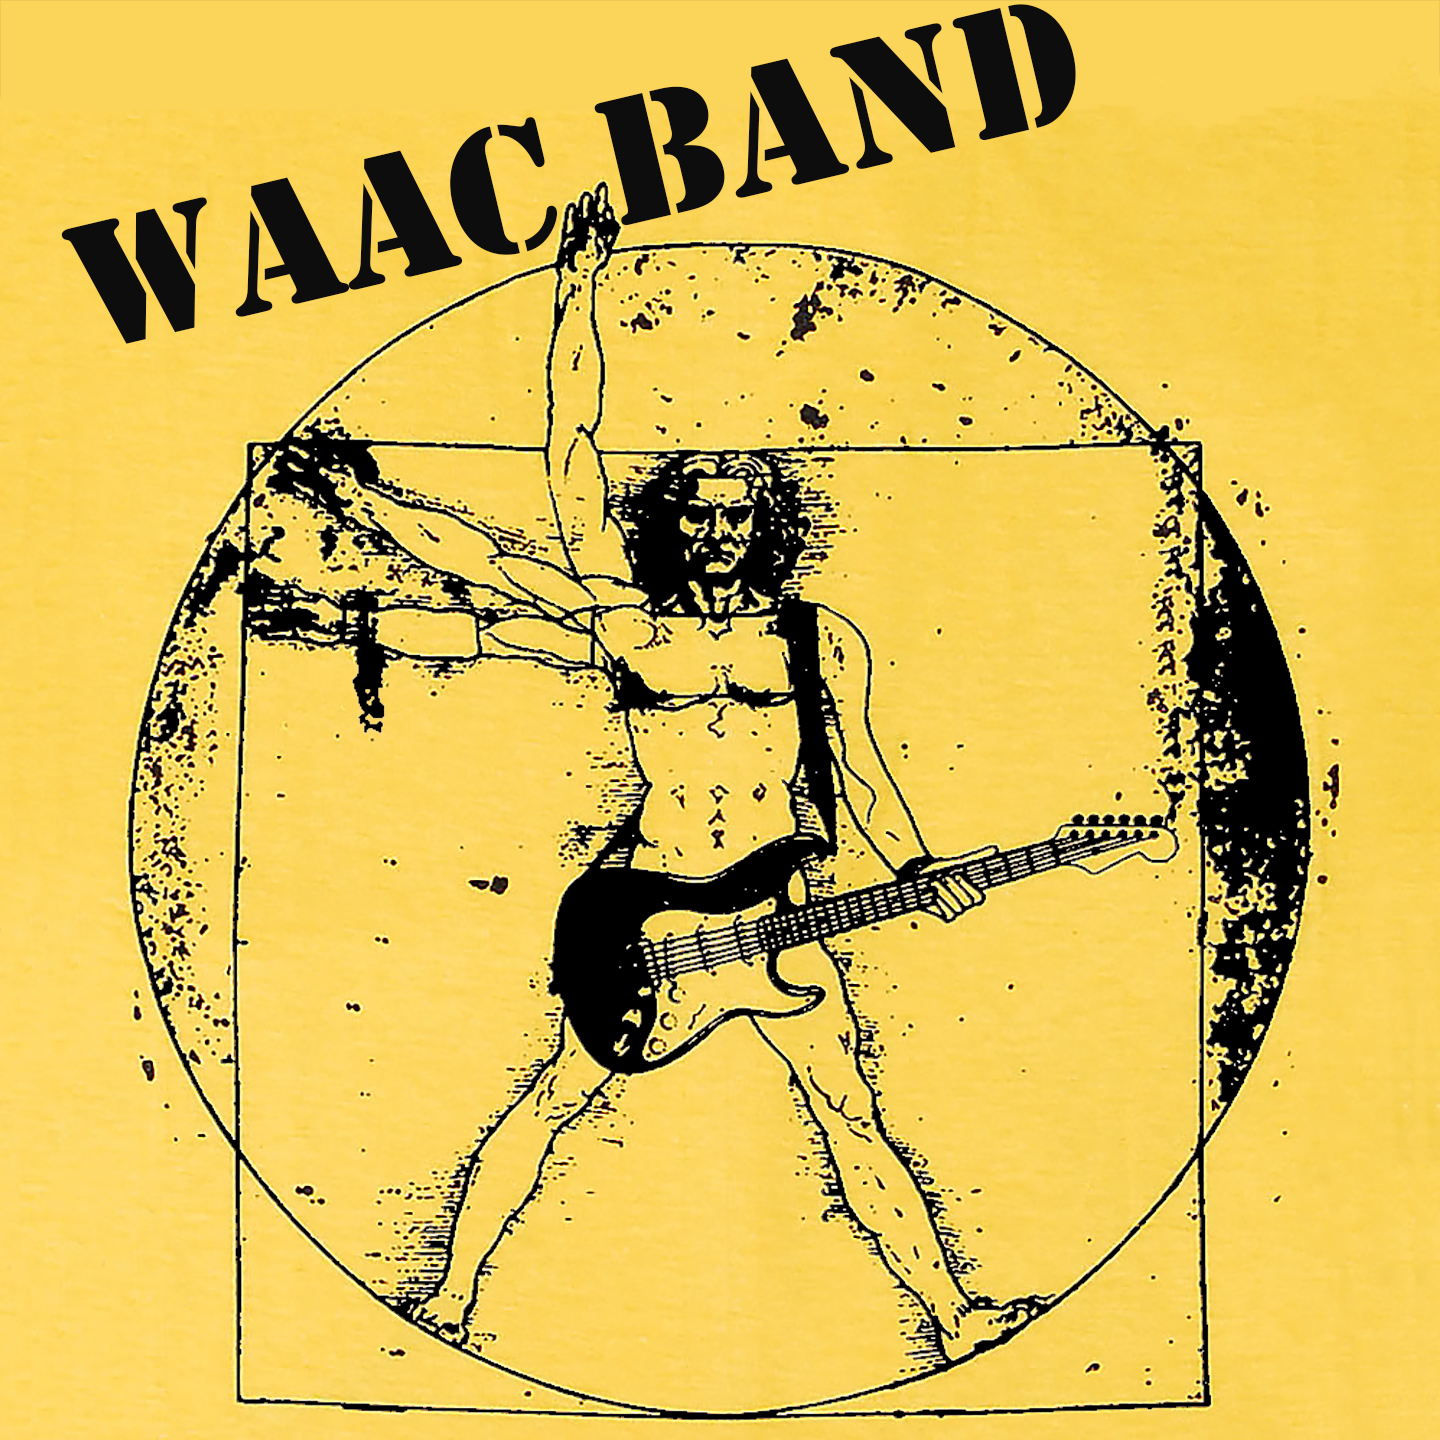 WAAC Band